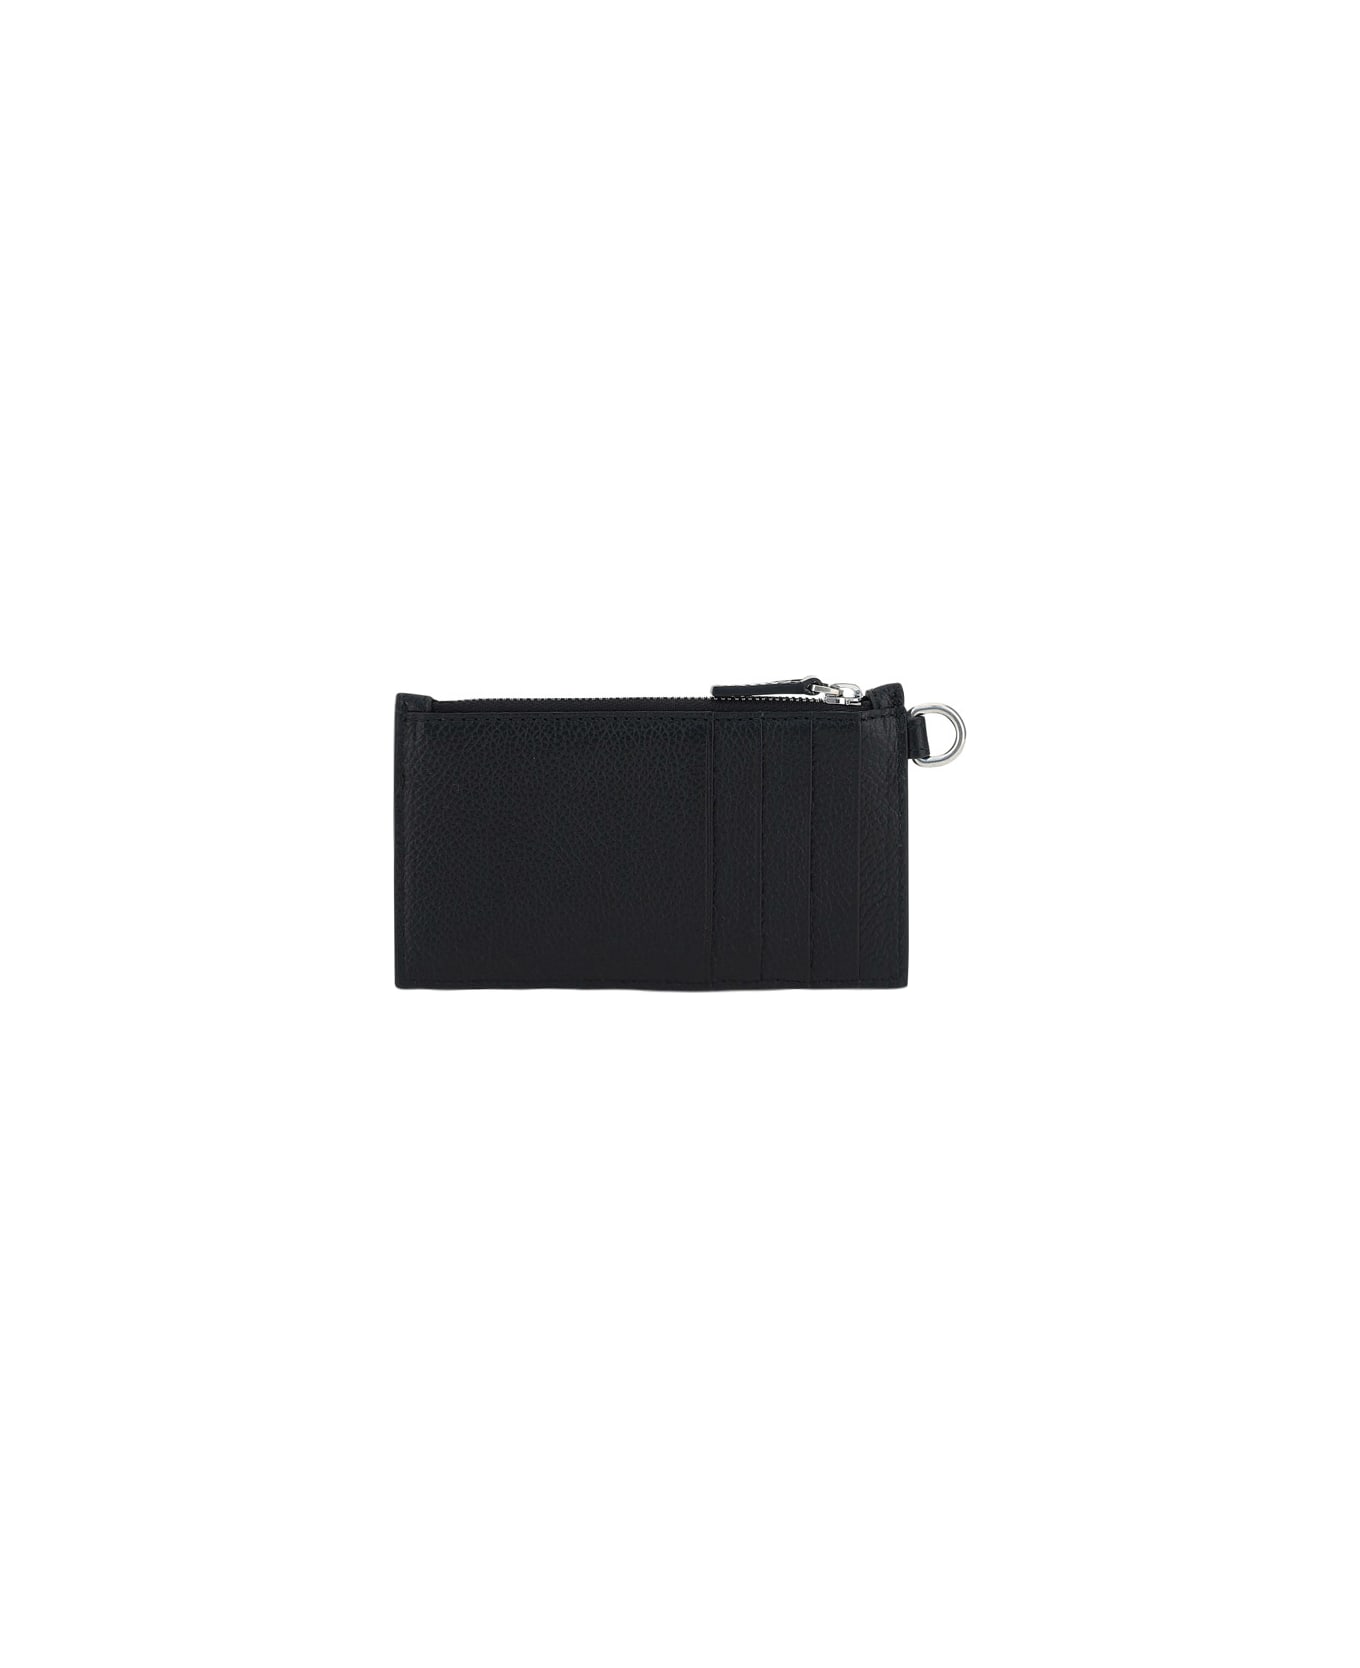 Balenciaga Neckstrap Cash Card Case - Black/l White 財布